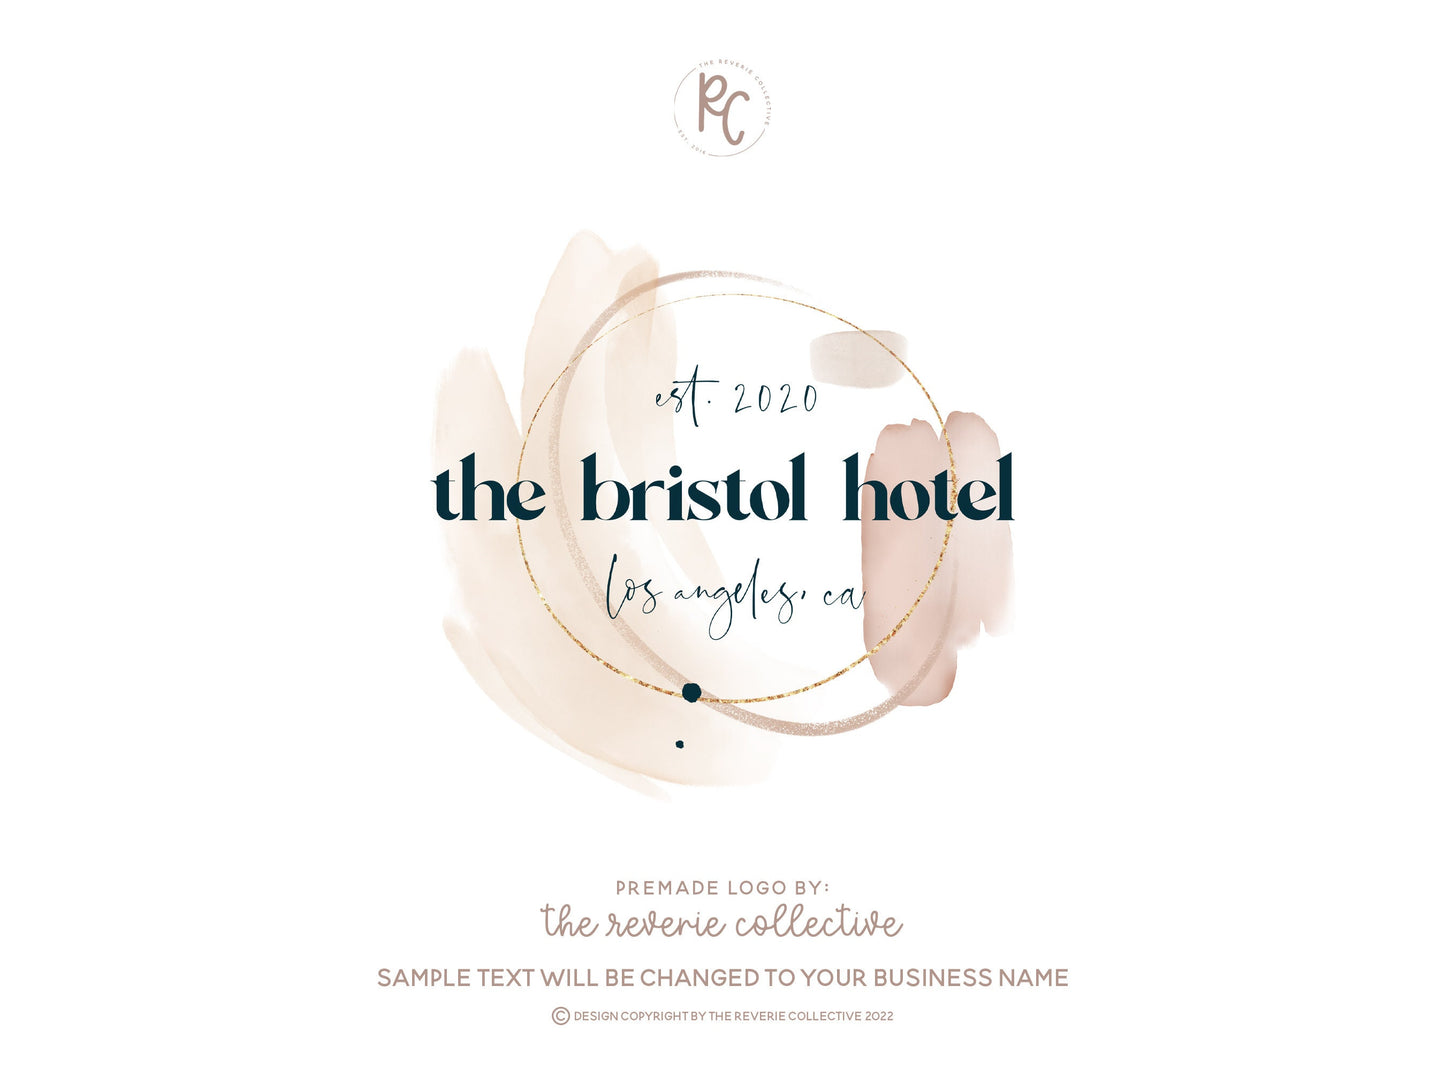 The Bristol Hotel | Premade Logo Design | Abstract, Boho, Vintage